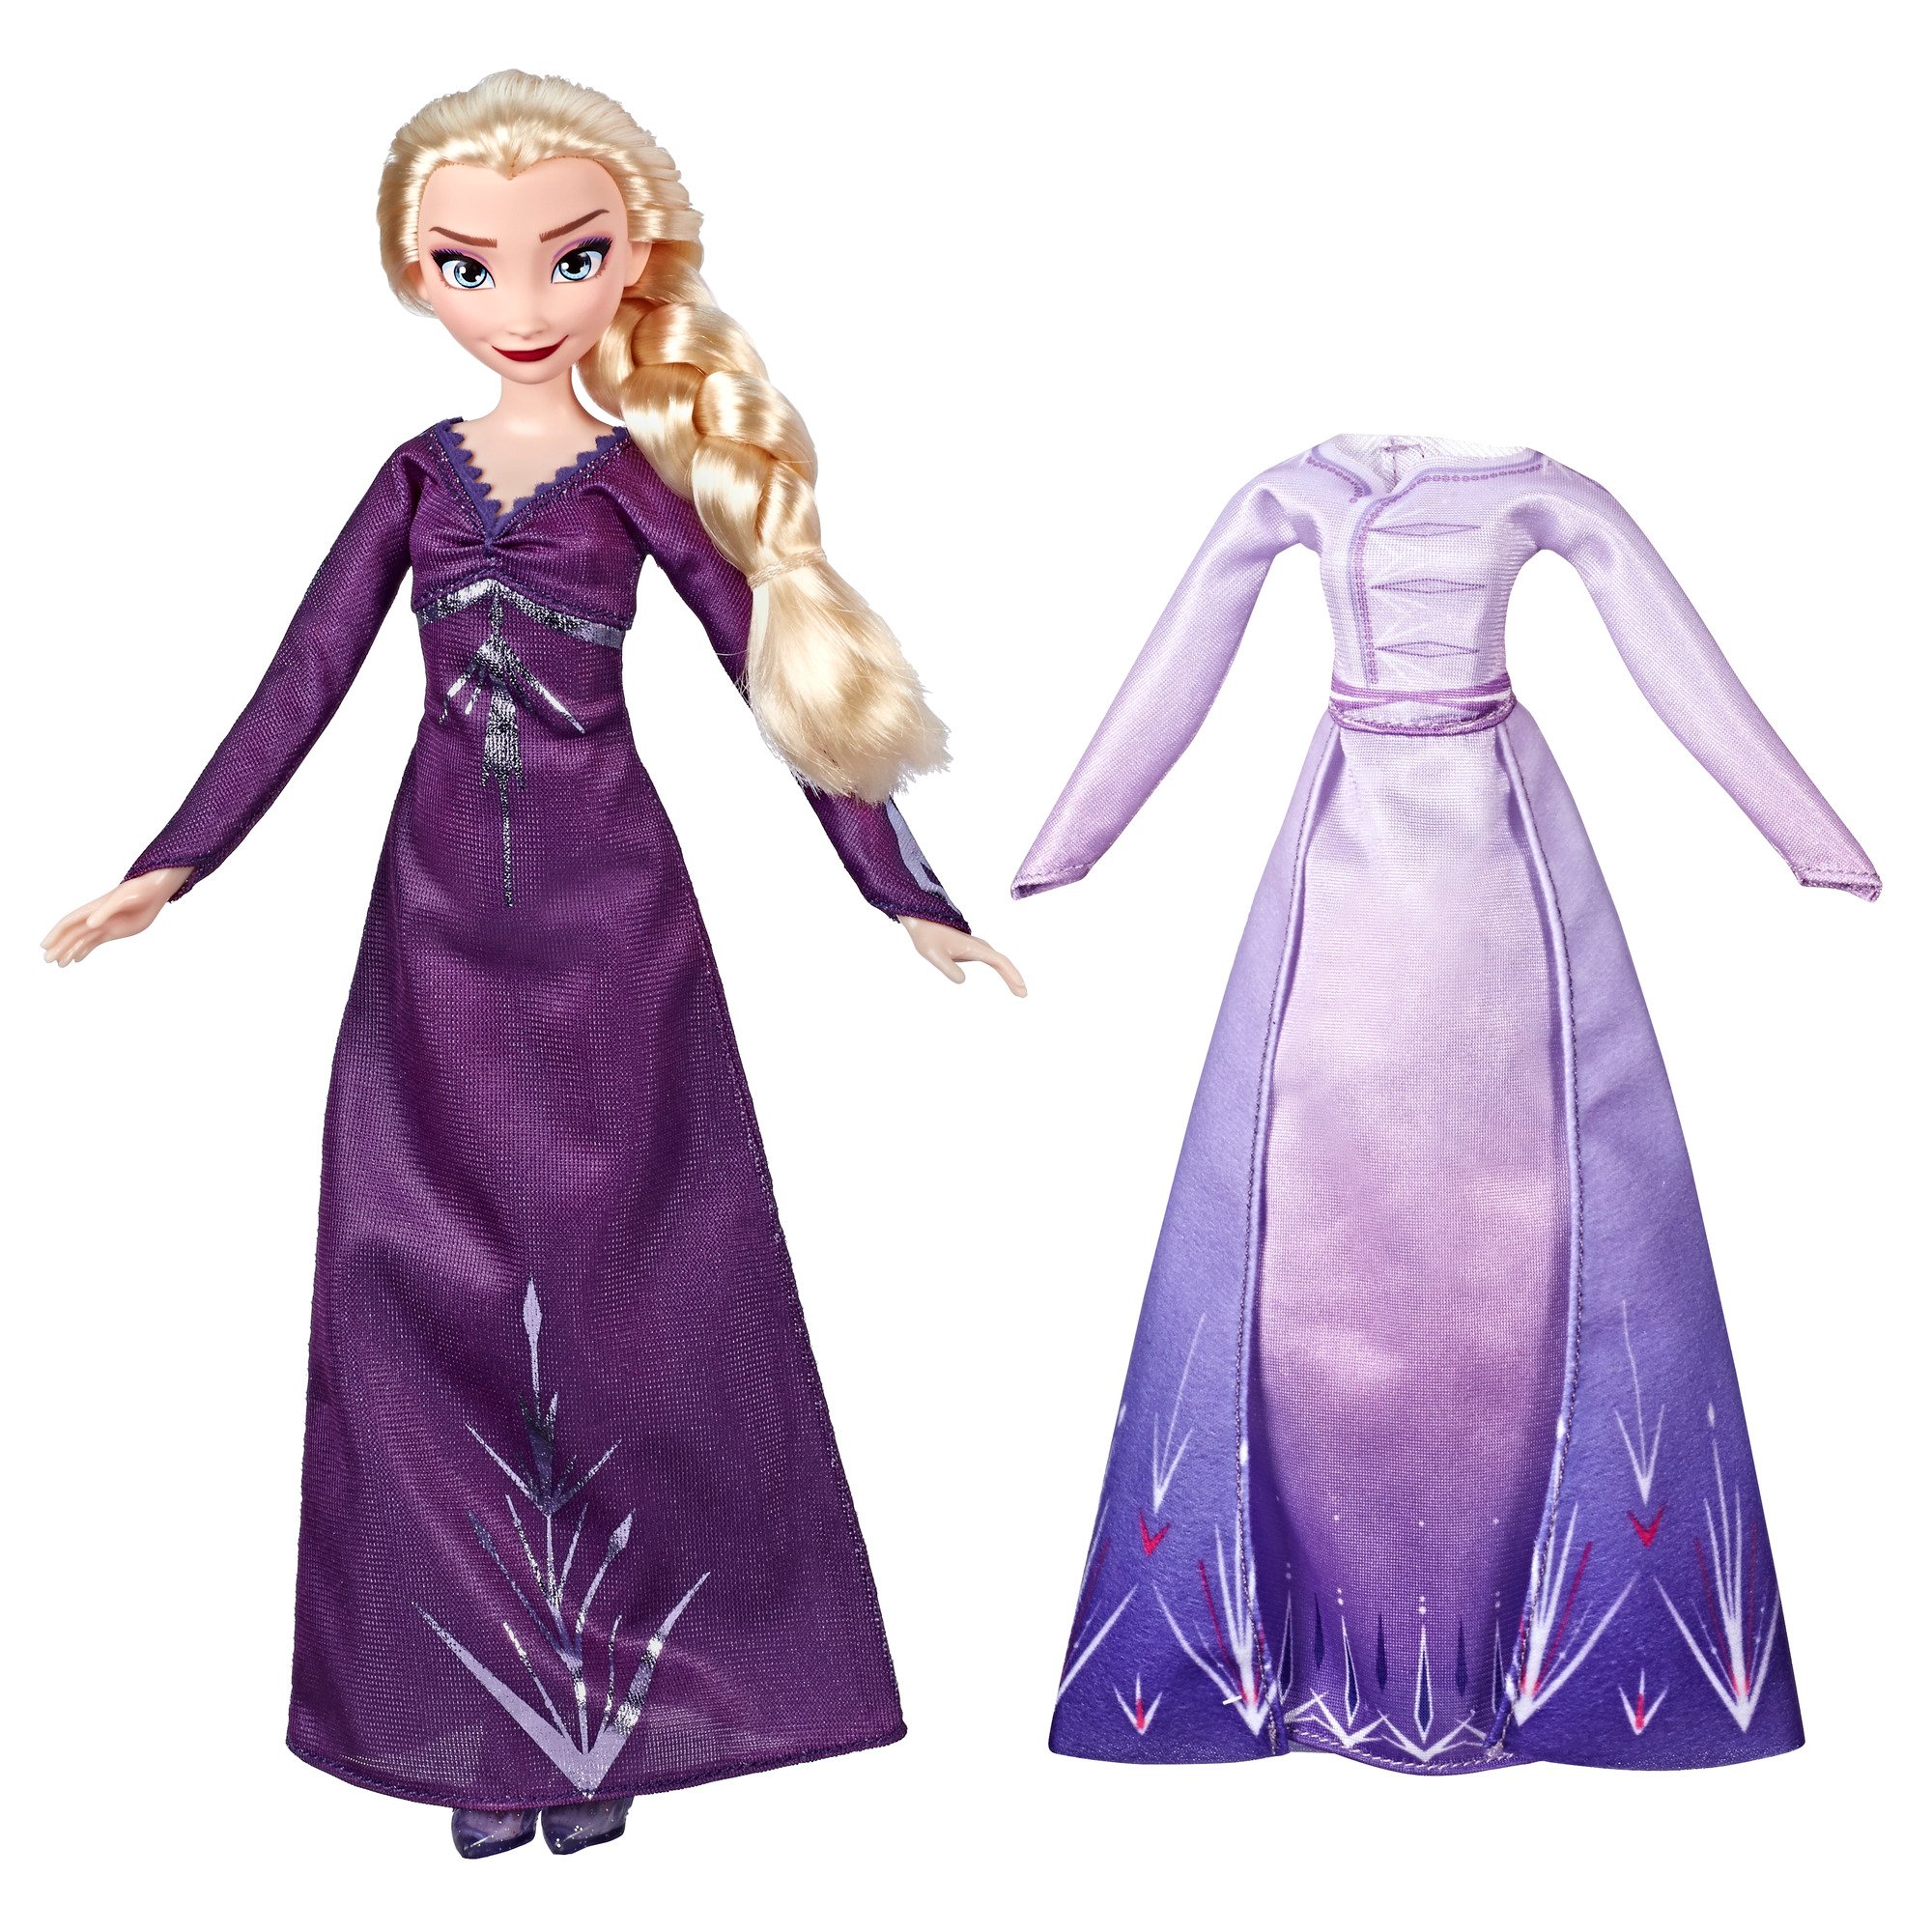 2 - Dukke Tøj - Elsa